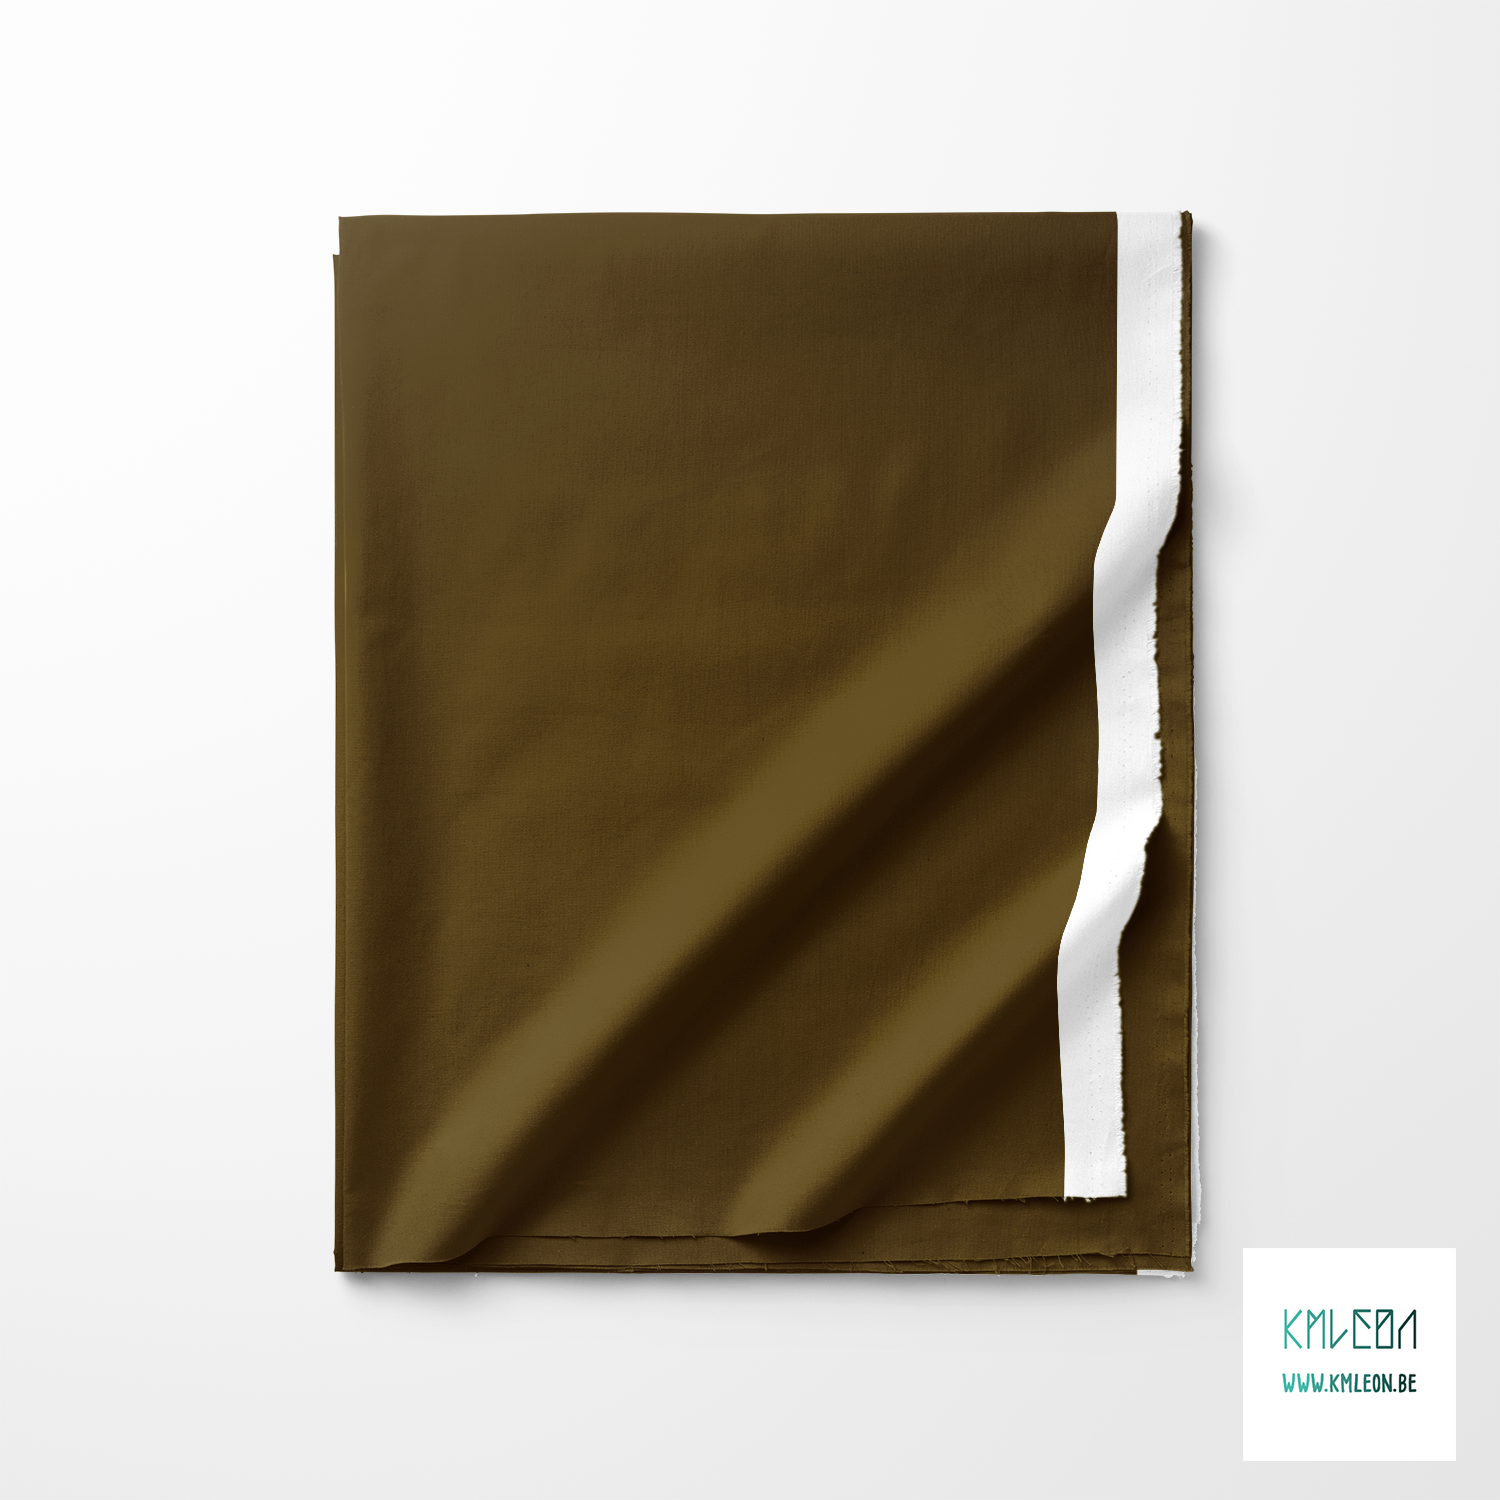 Solid mikado brown fabric